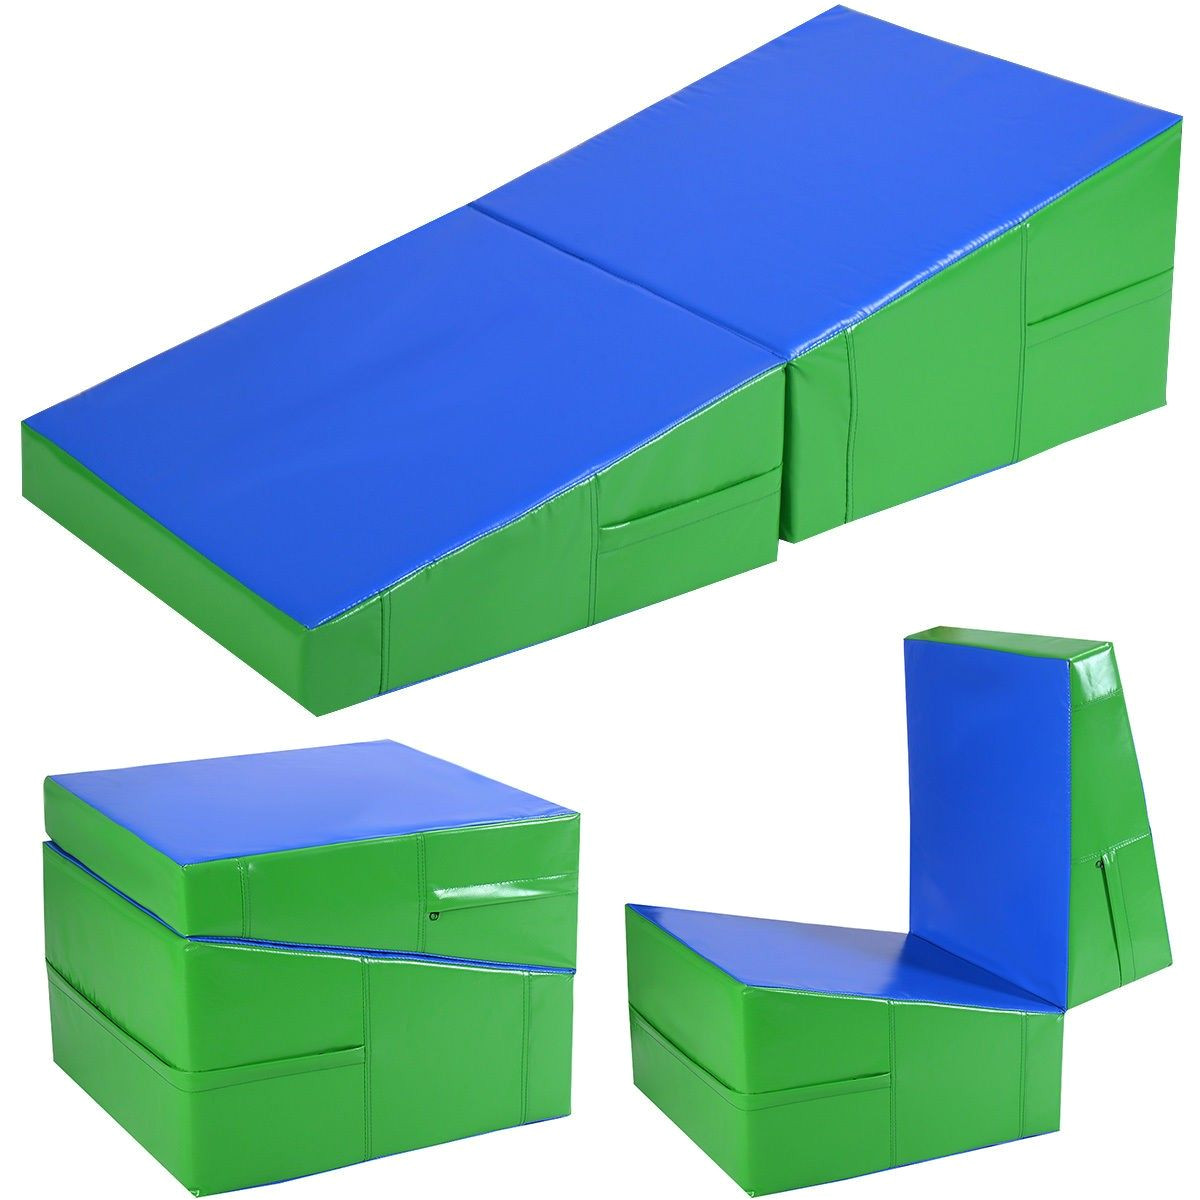 costway 48 x 24 x 14 incline wedge folding gymnastics mat w free shipping costway sporting